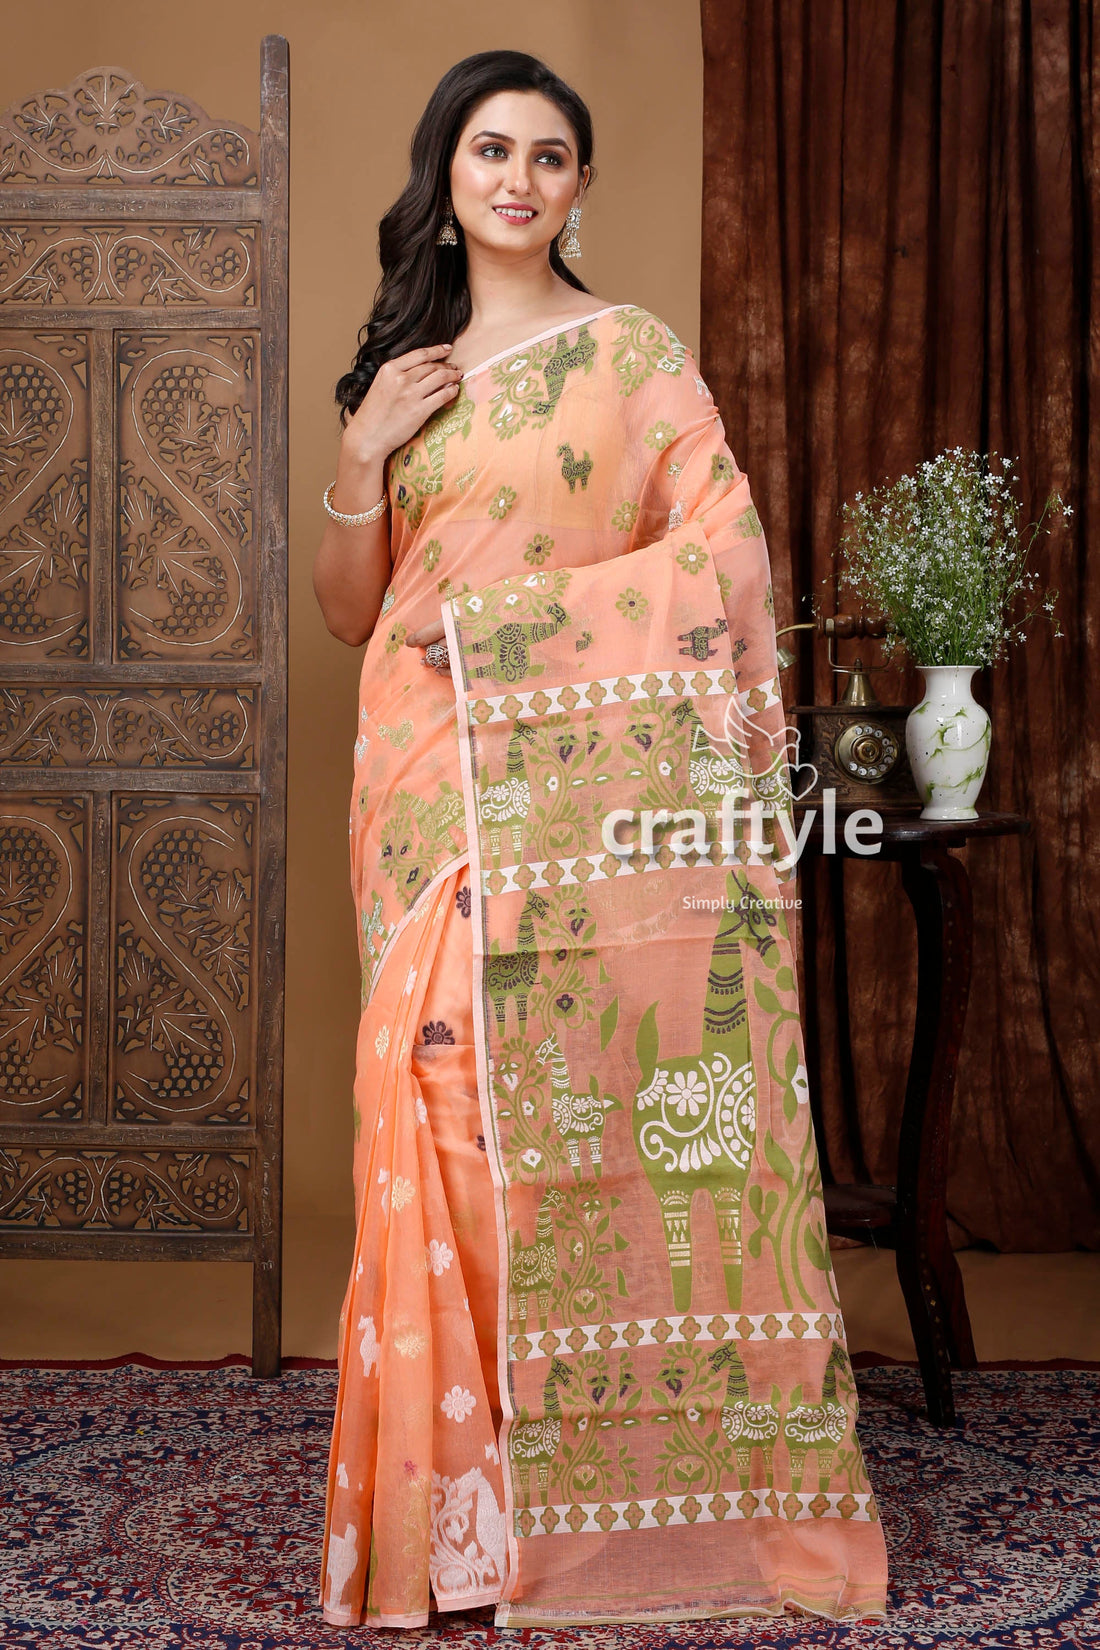 Handloom Peach Green Jamdani Sari - Traditional Indian Sari for Women - Craftyle